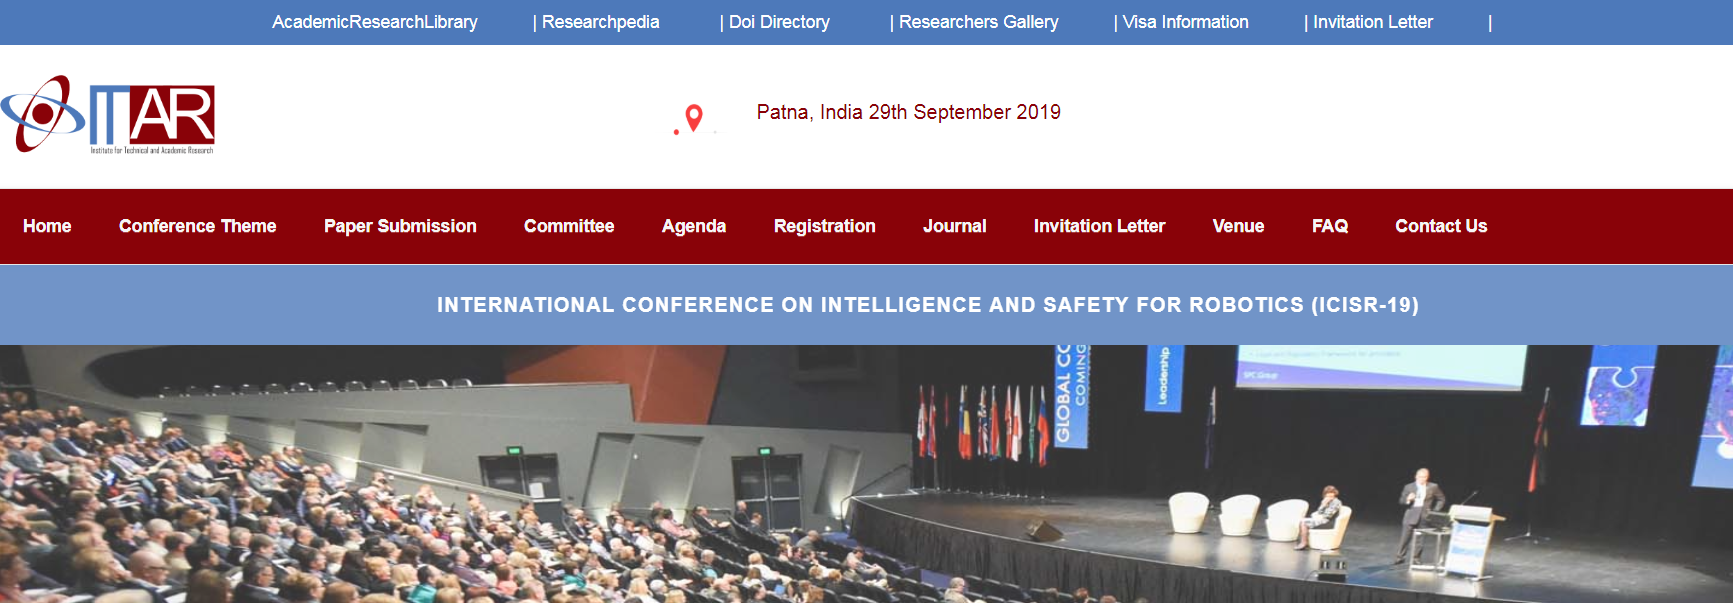 International Conference on Intelligence and Safety for Robotics (ICISR-19), Patna, Bihar, India